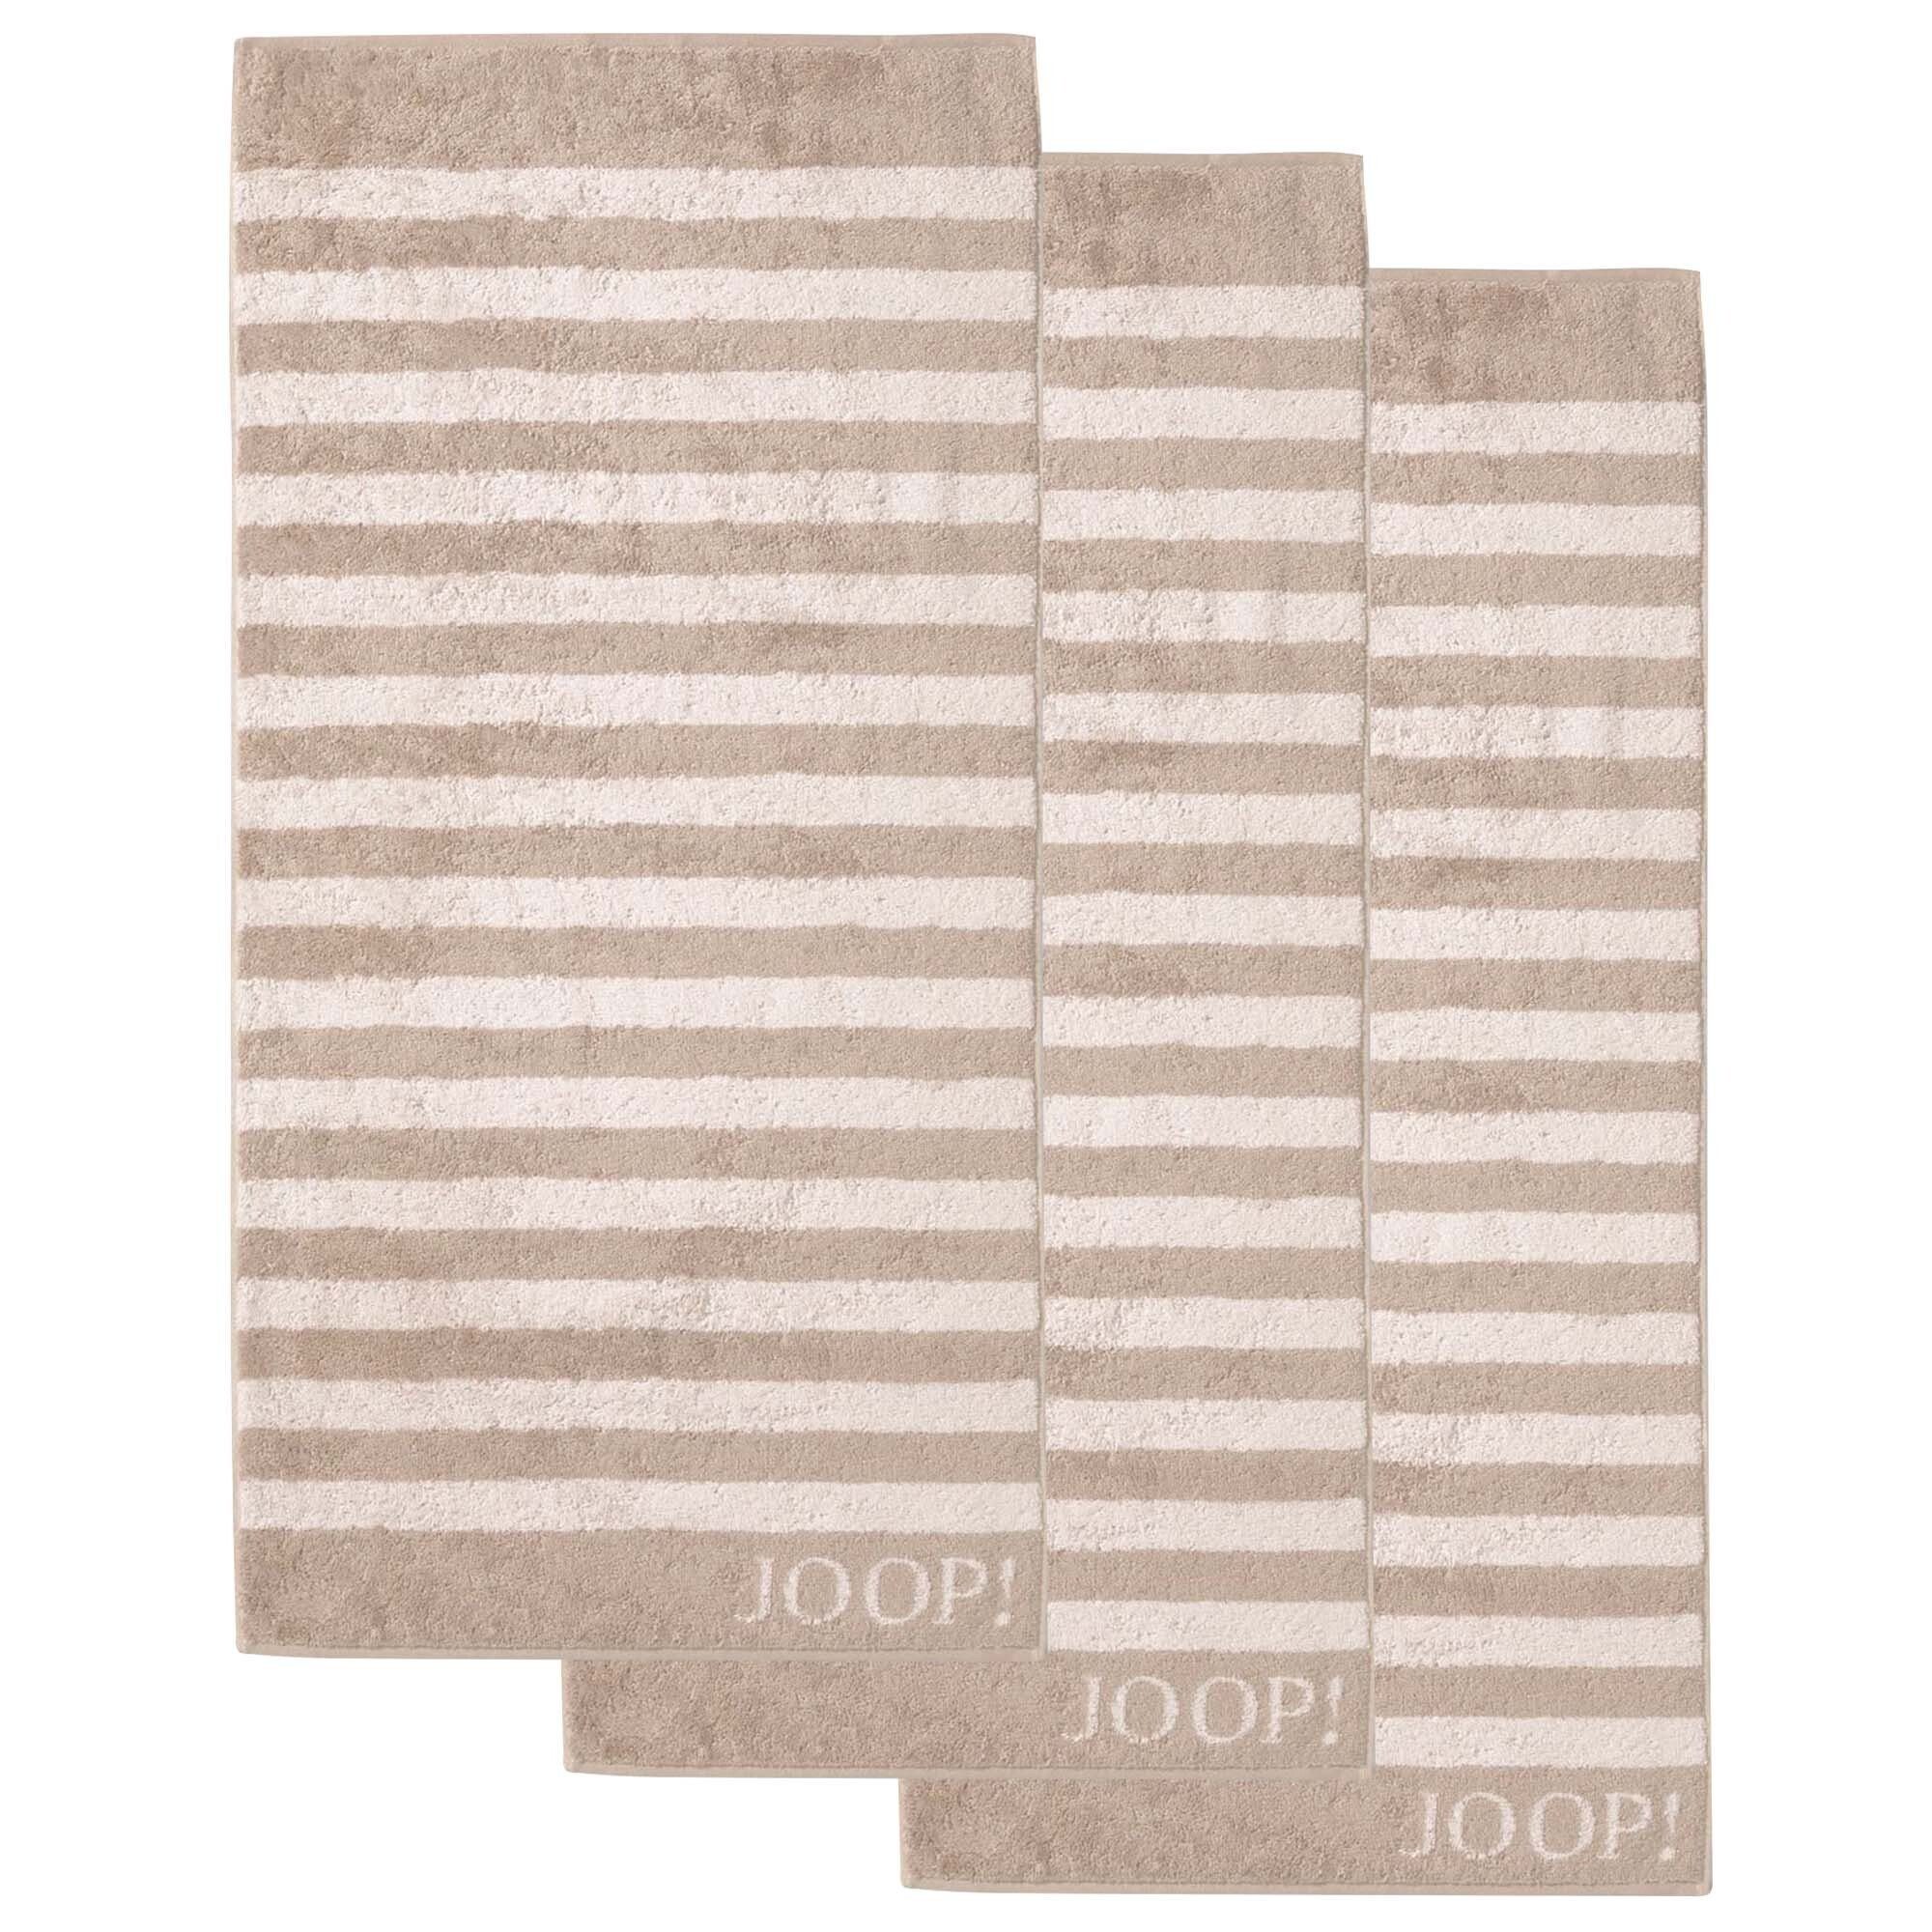 Joop! Handtuch HHandtuch, 3er Pack - Classic Stripes, 50x100 cm, Frottier (3-St) Beige